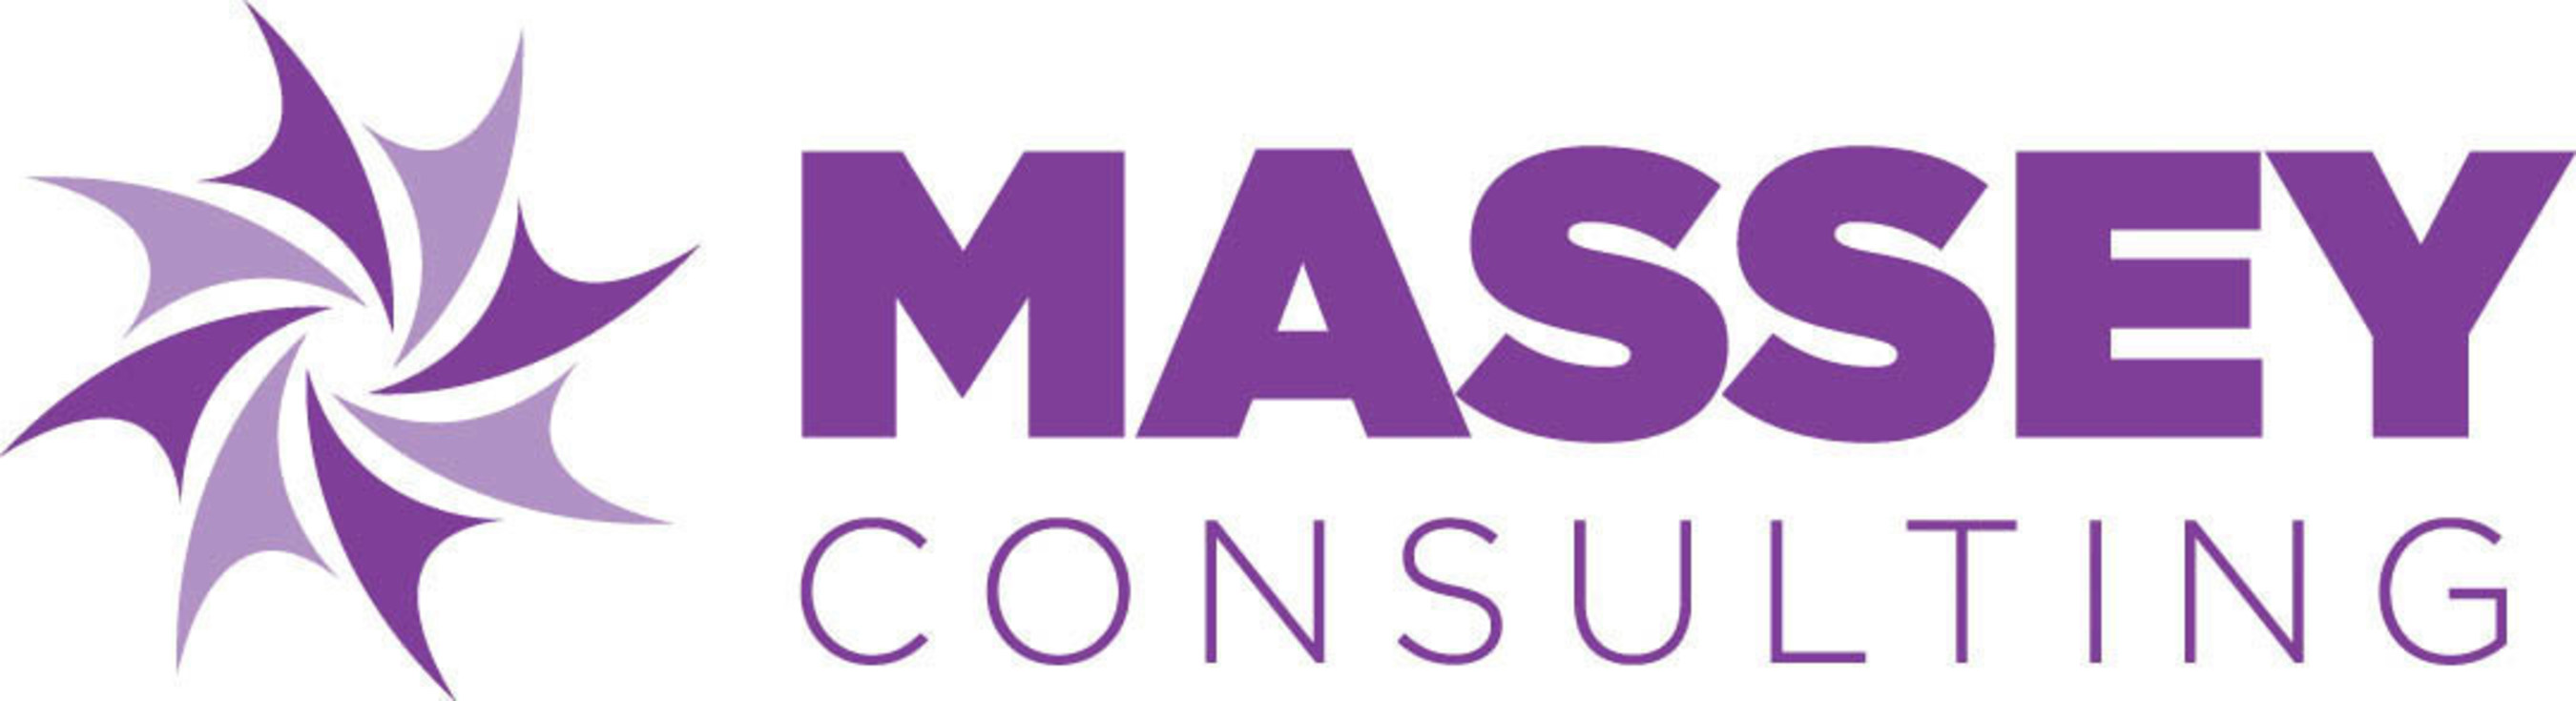 Massey Consulting logo